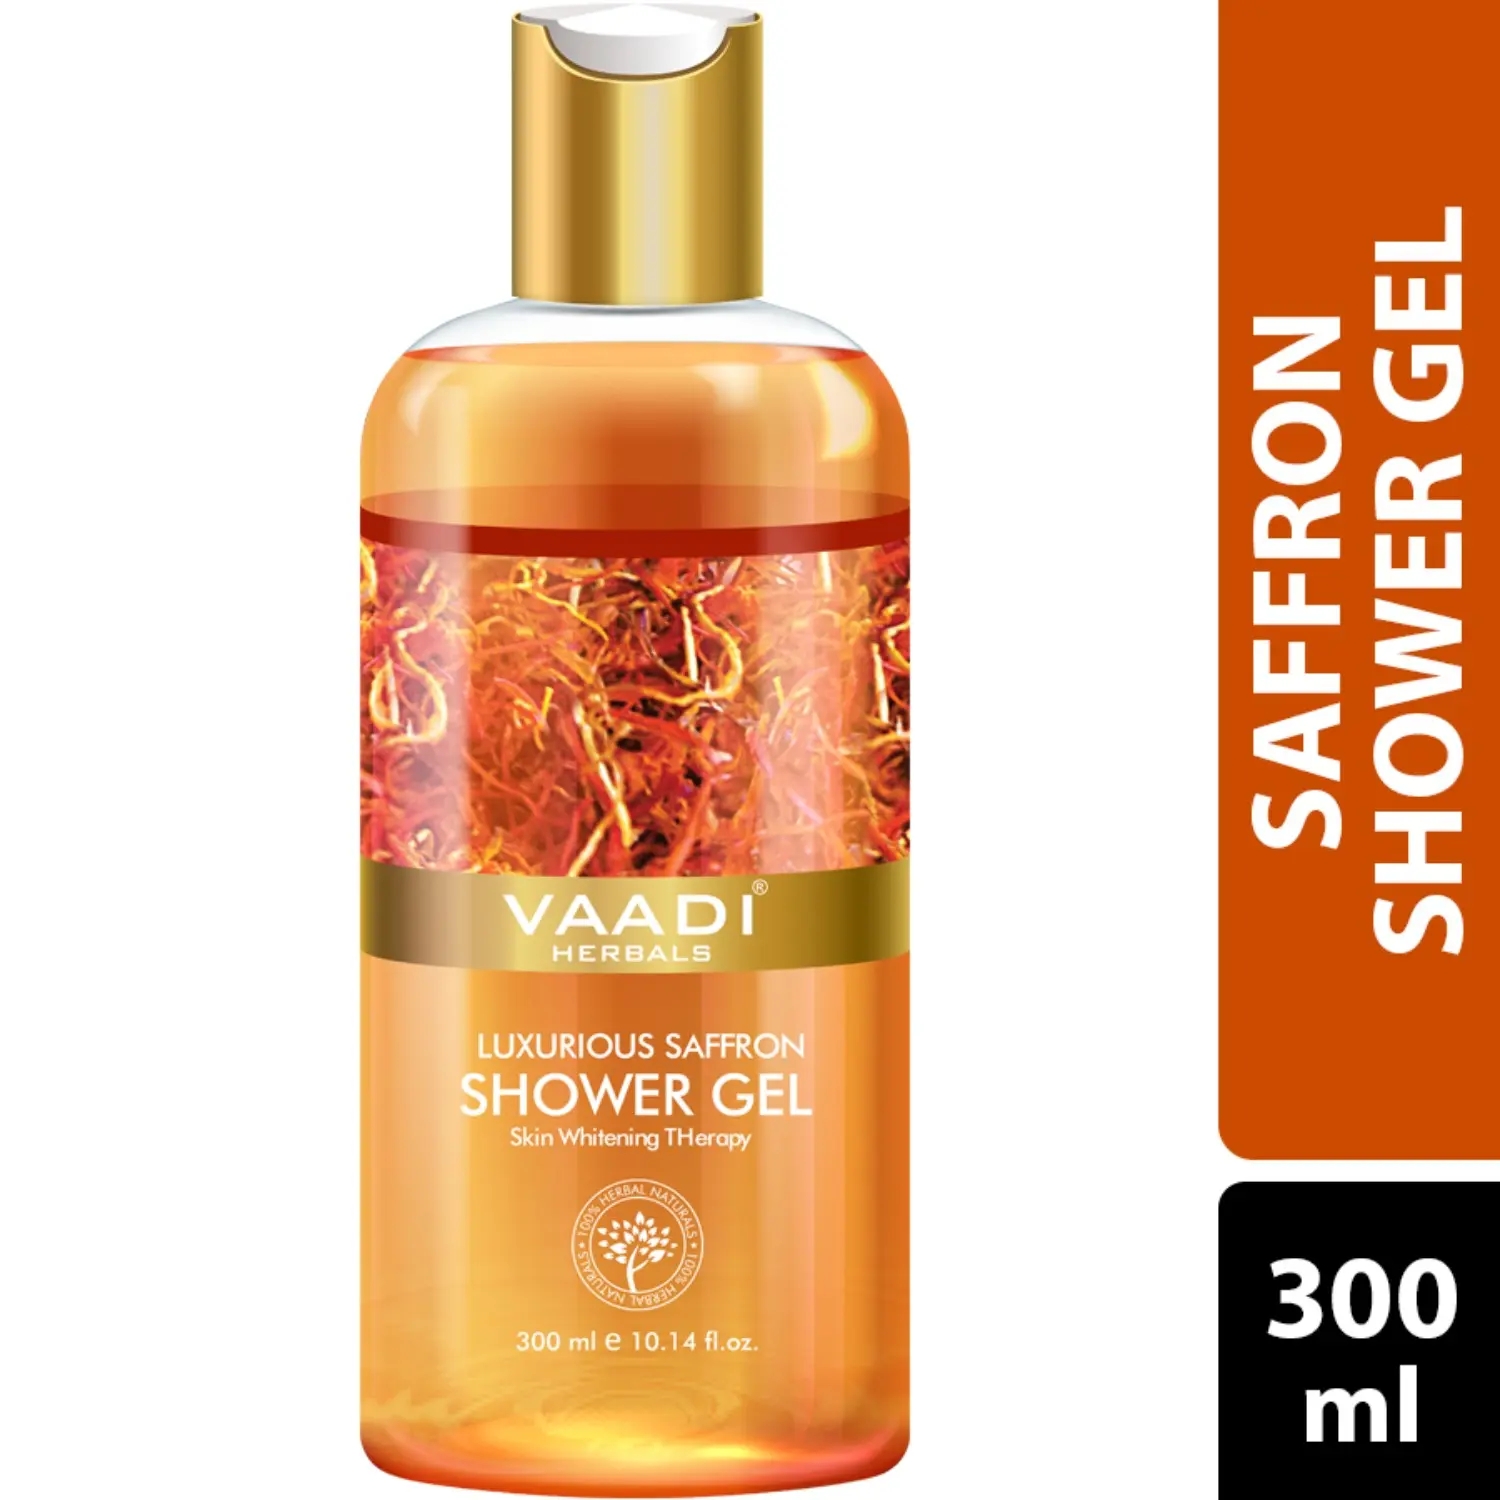 Vaadi Herbals | Vaadi Herbals Luxurious Saffron Shower Gel (300ml)